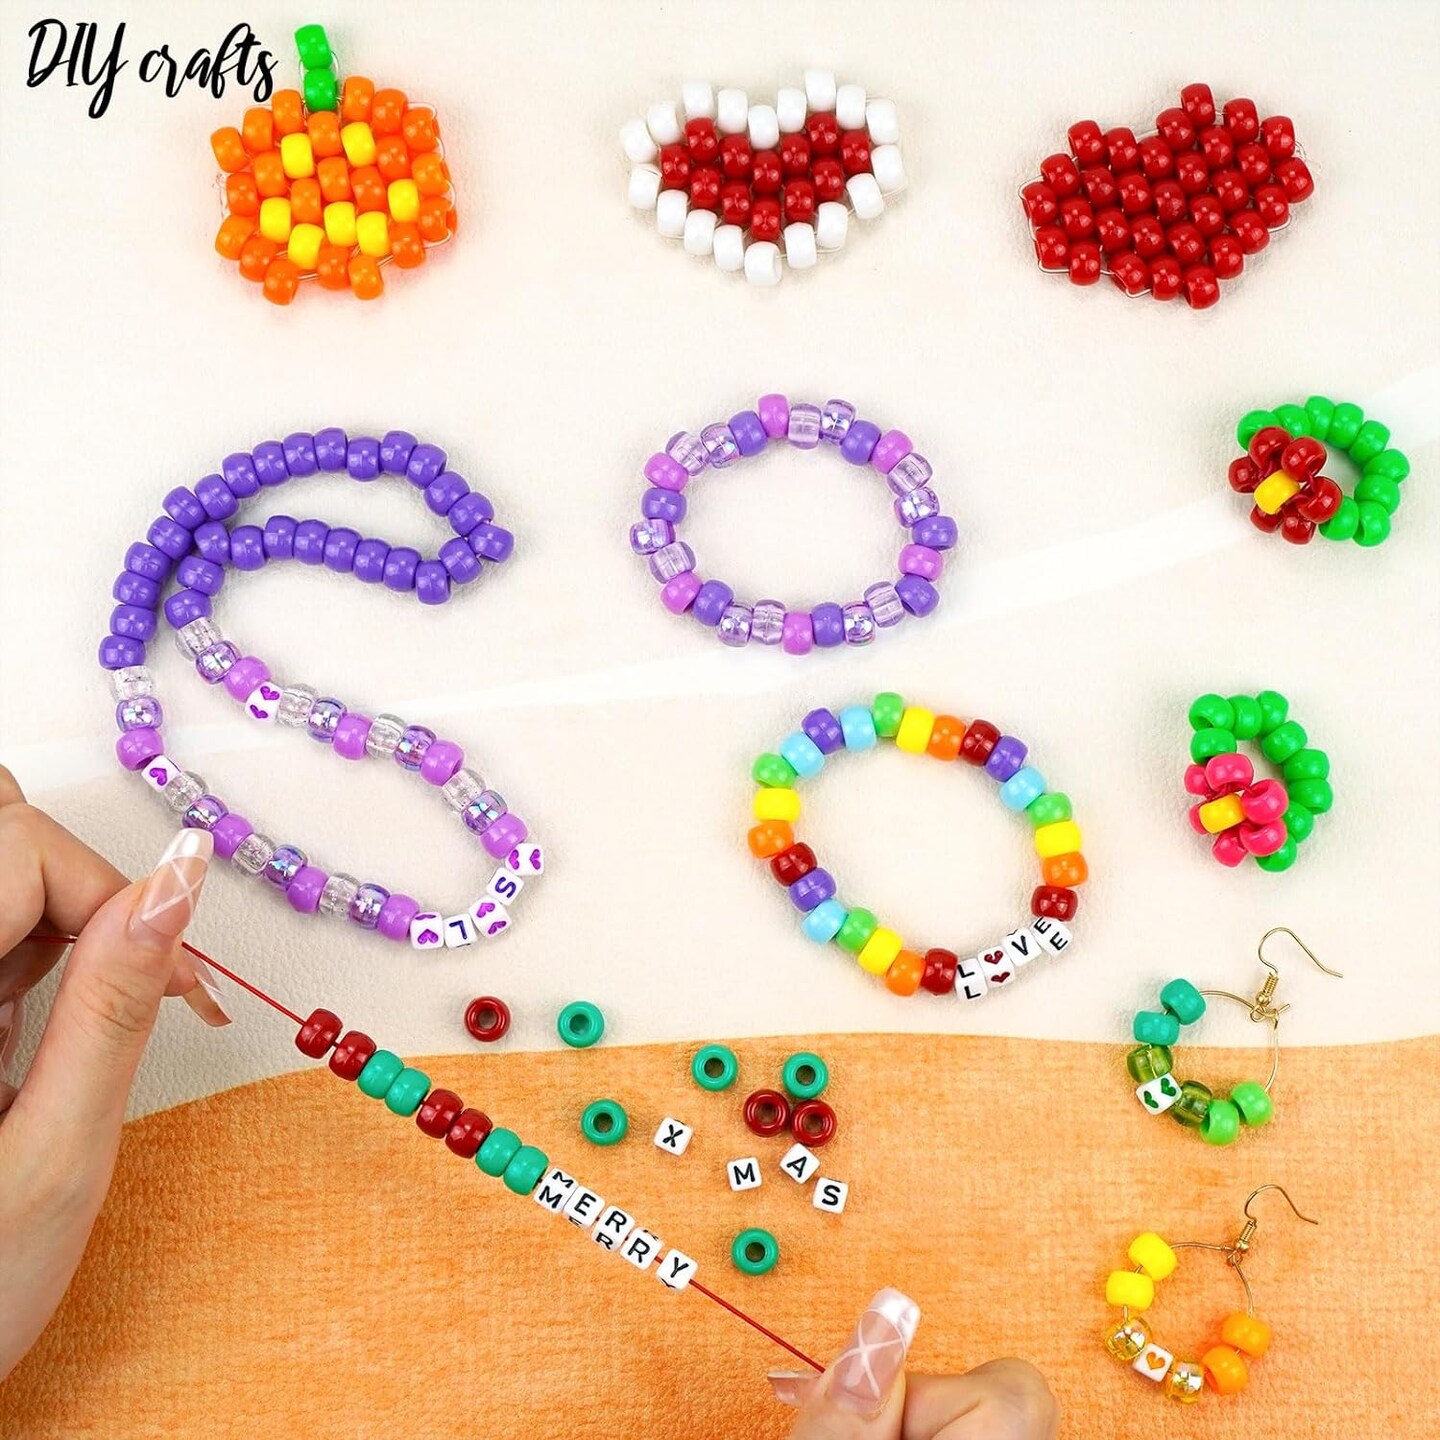 Friendship Bracelet Kit, 24 Colors Bracelet Making Kit Pony Beads for Jewelry Making, Letter Beads Heart Beads for Bracelet Making, Ideal Gifts for Teen Girls Kids Adults